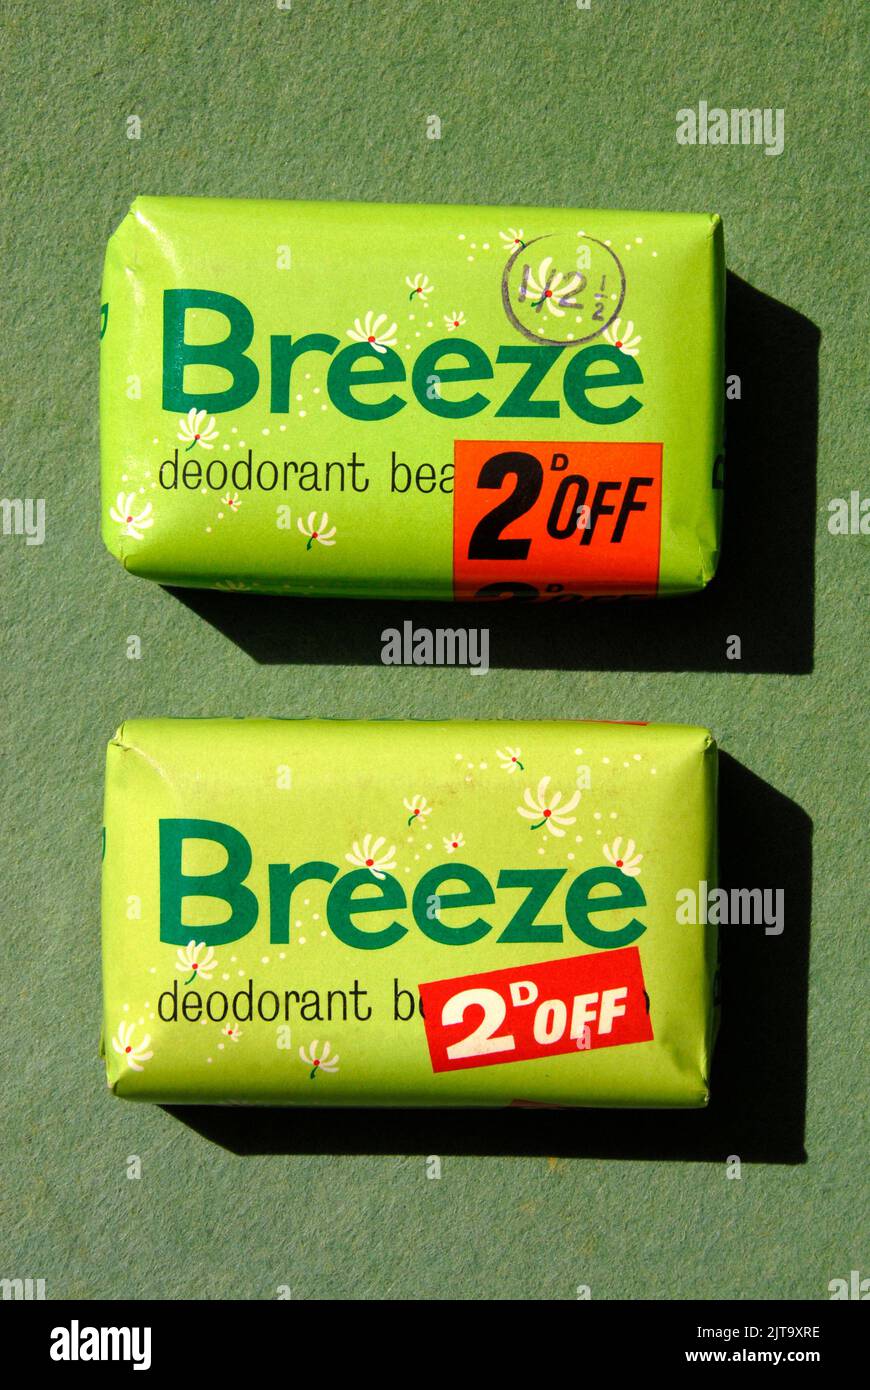 Dos barras de jabón Breeze con etiqueta de descuento, 2D de descuento Foto de stock